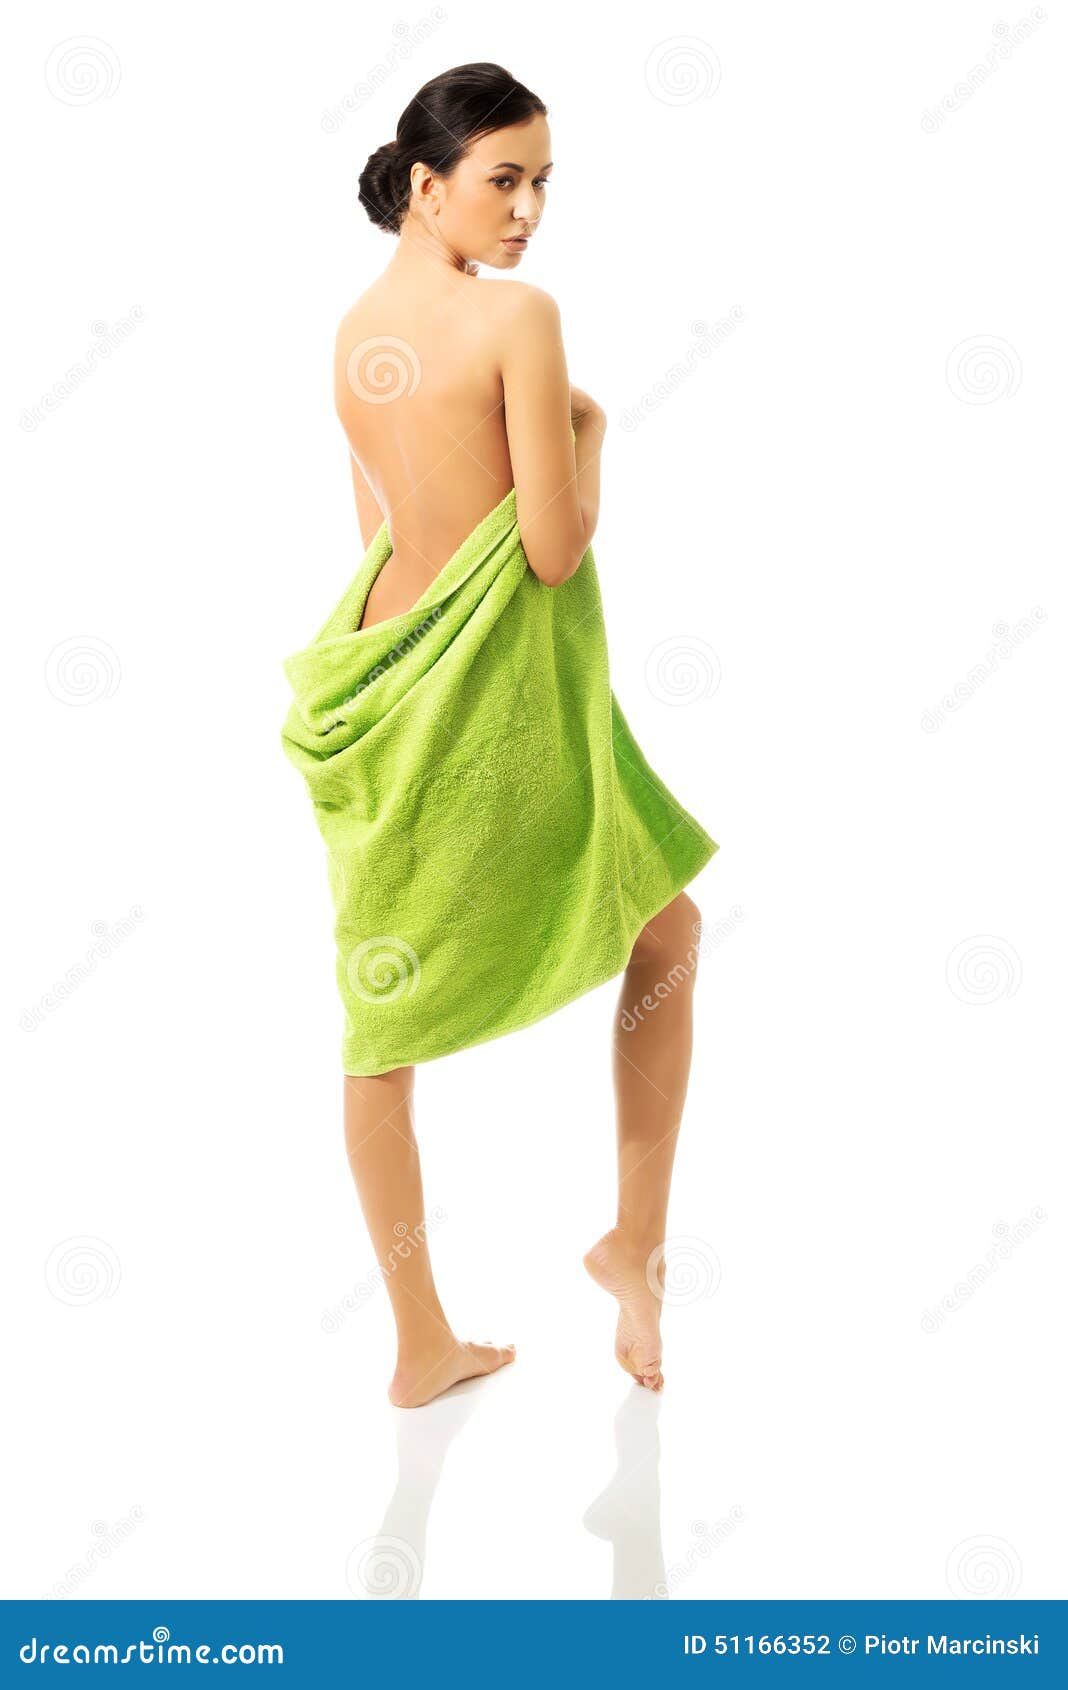 Обернутая полотенцем. Девушка завернутая в полотенце. Девушка в одном полотенце. Девушка обернутая в полотенце. Полотенце на бедрах.